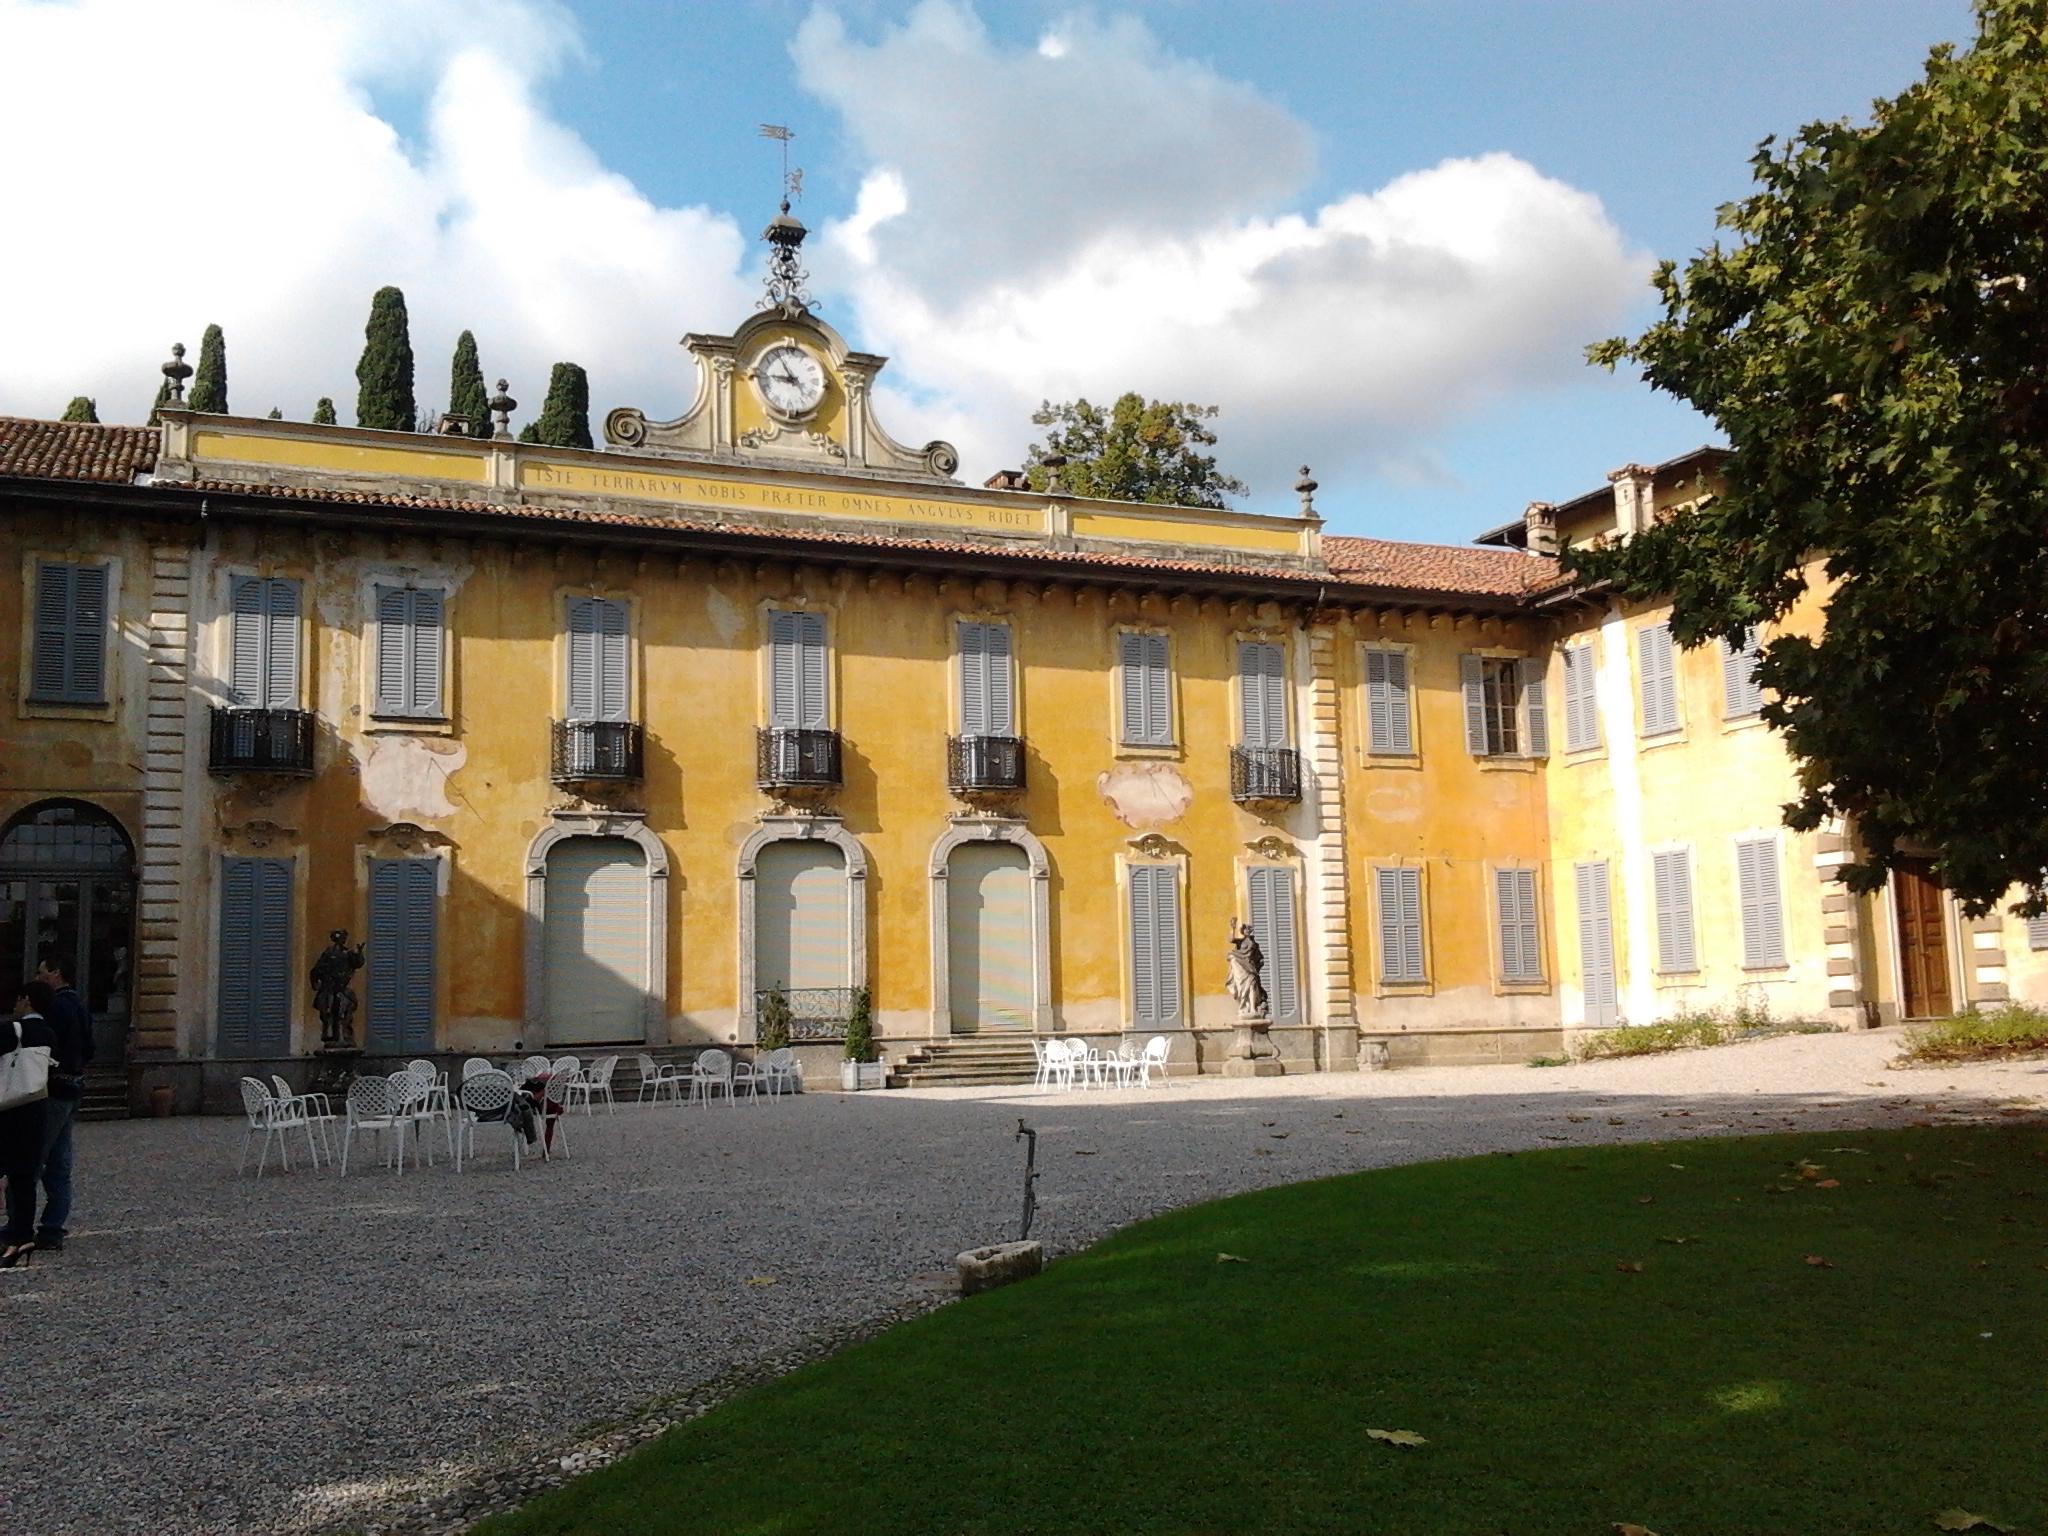 Villa Sommi Picenardi